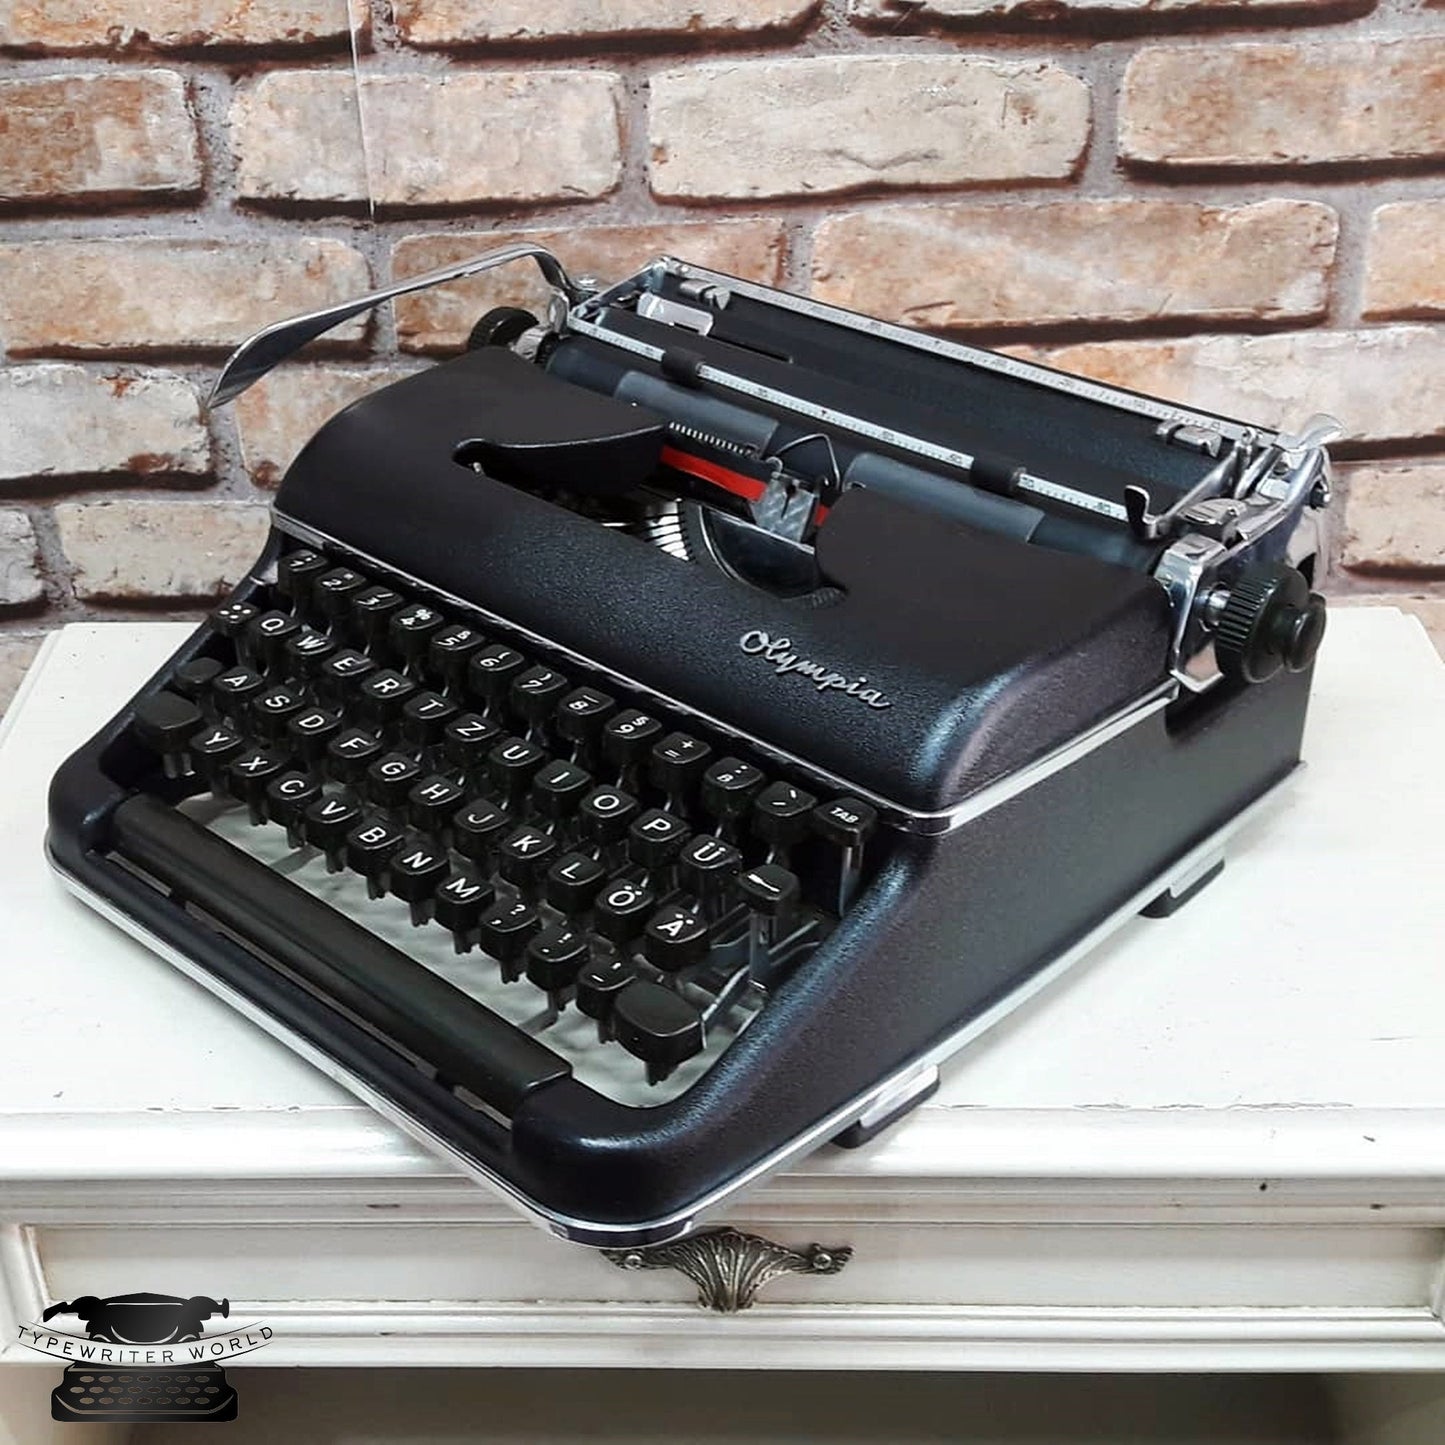 Olympia SM3 Black Typewriter, Vintage, Mint Condition, Manual Portable,best gift,typewriter working